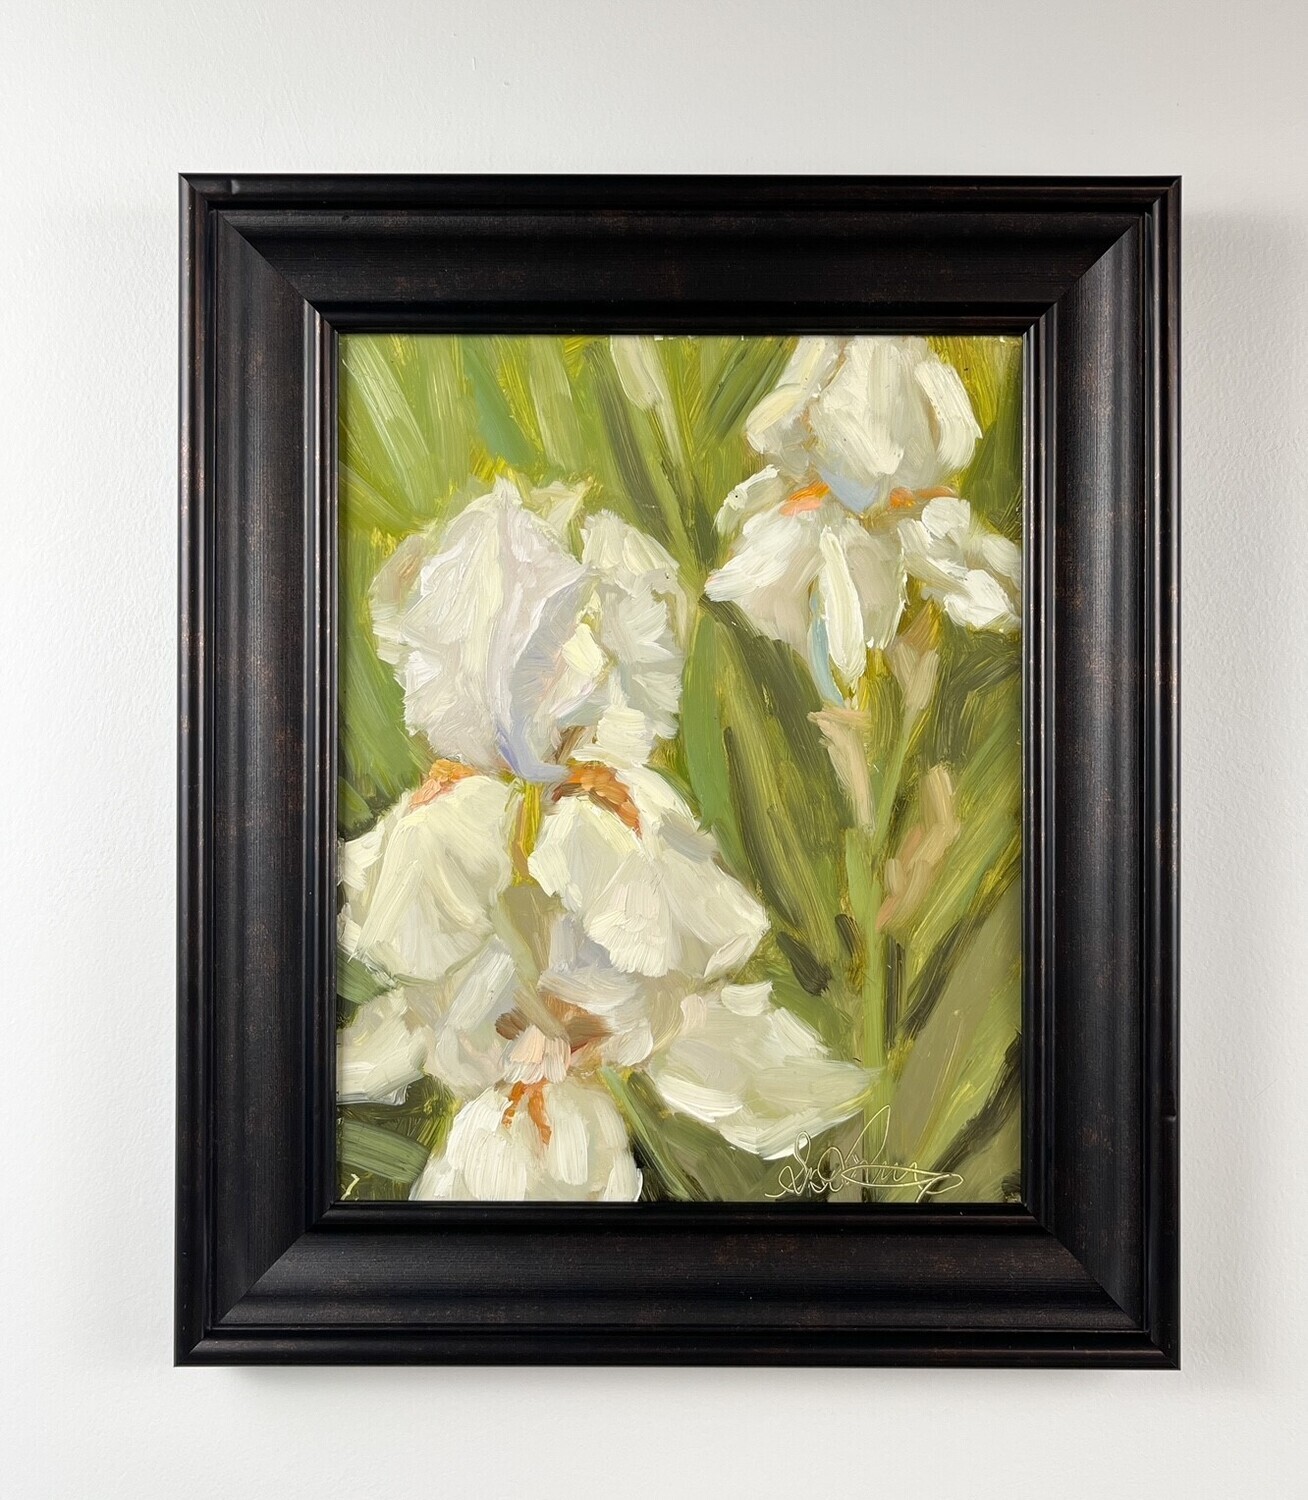 "German Iris" 8x10" Oil on Panel Framed 10.75x12.75"